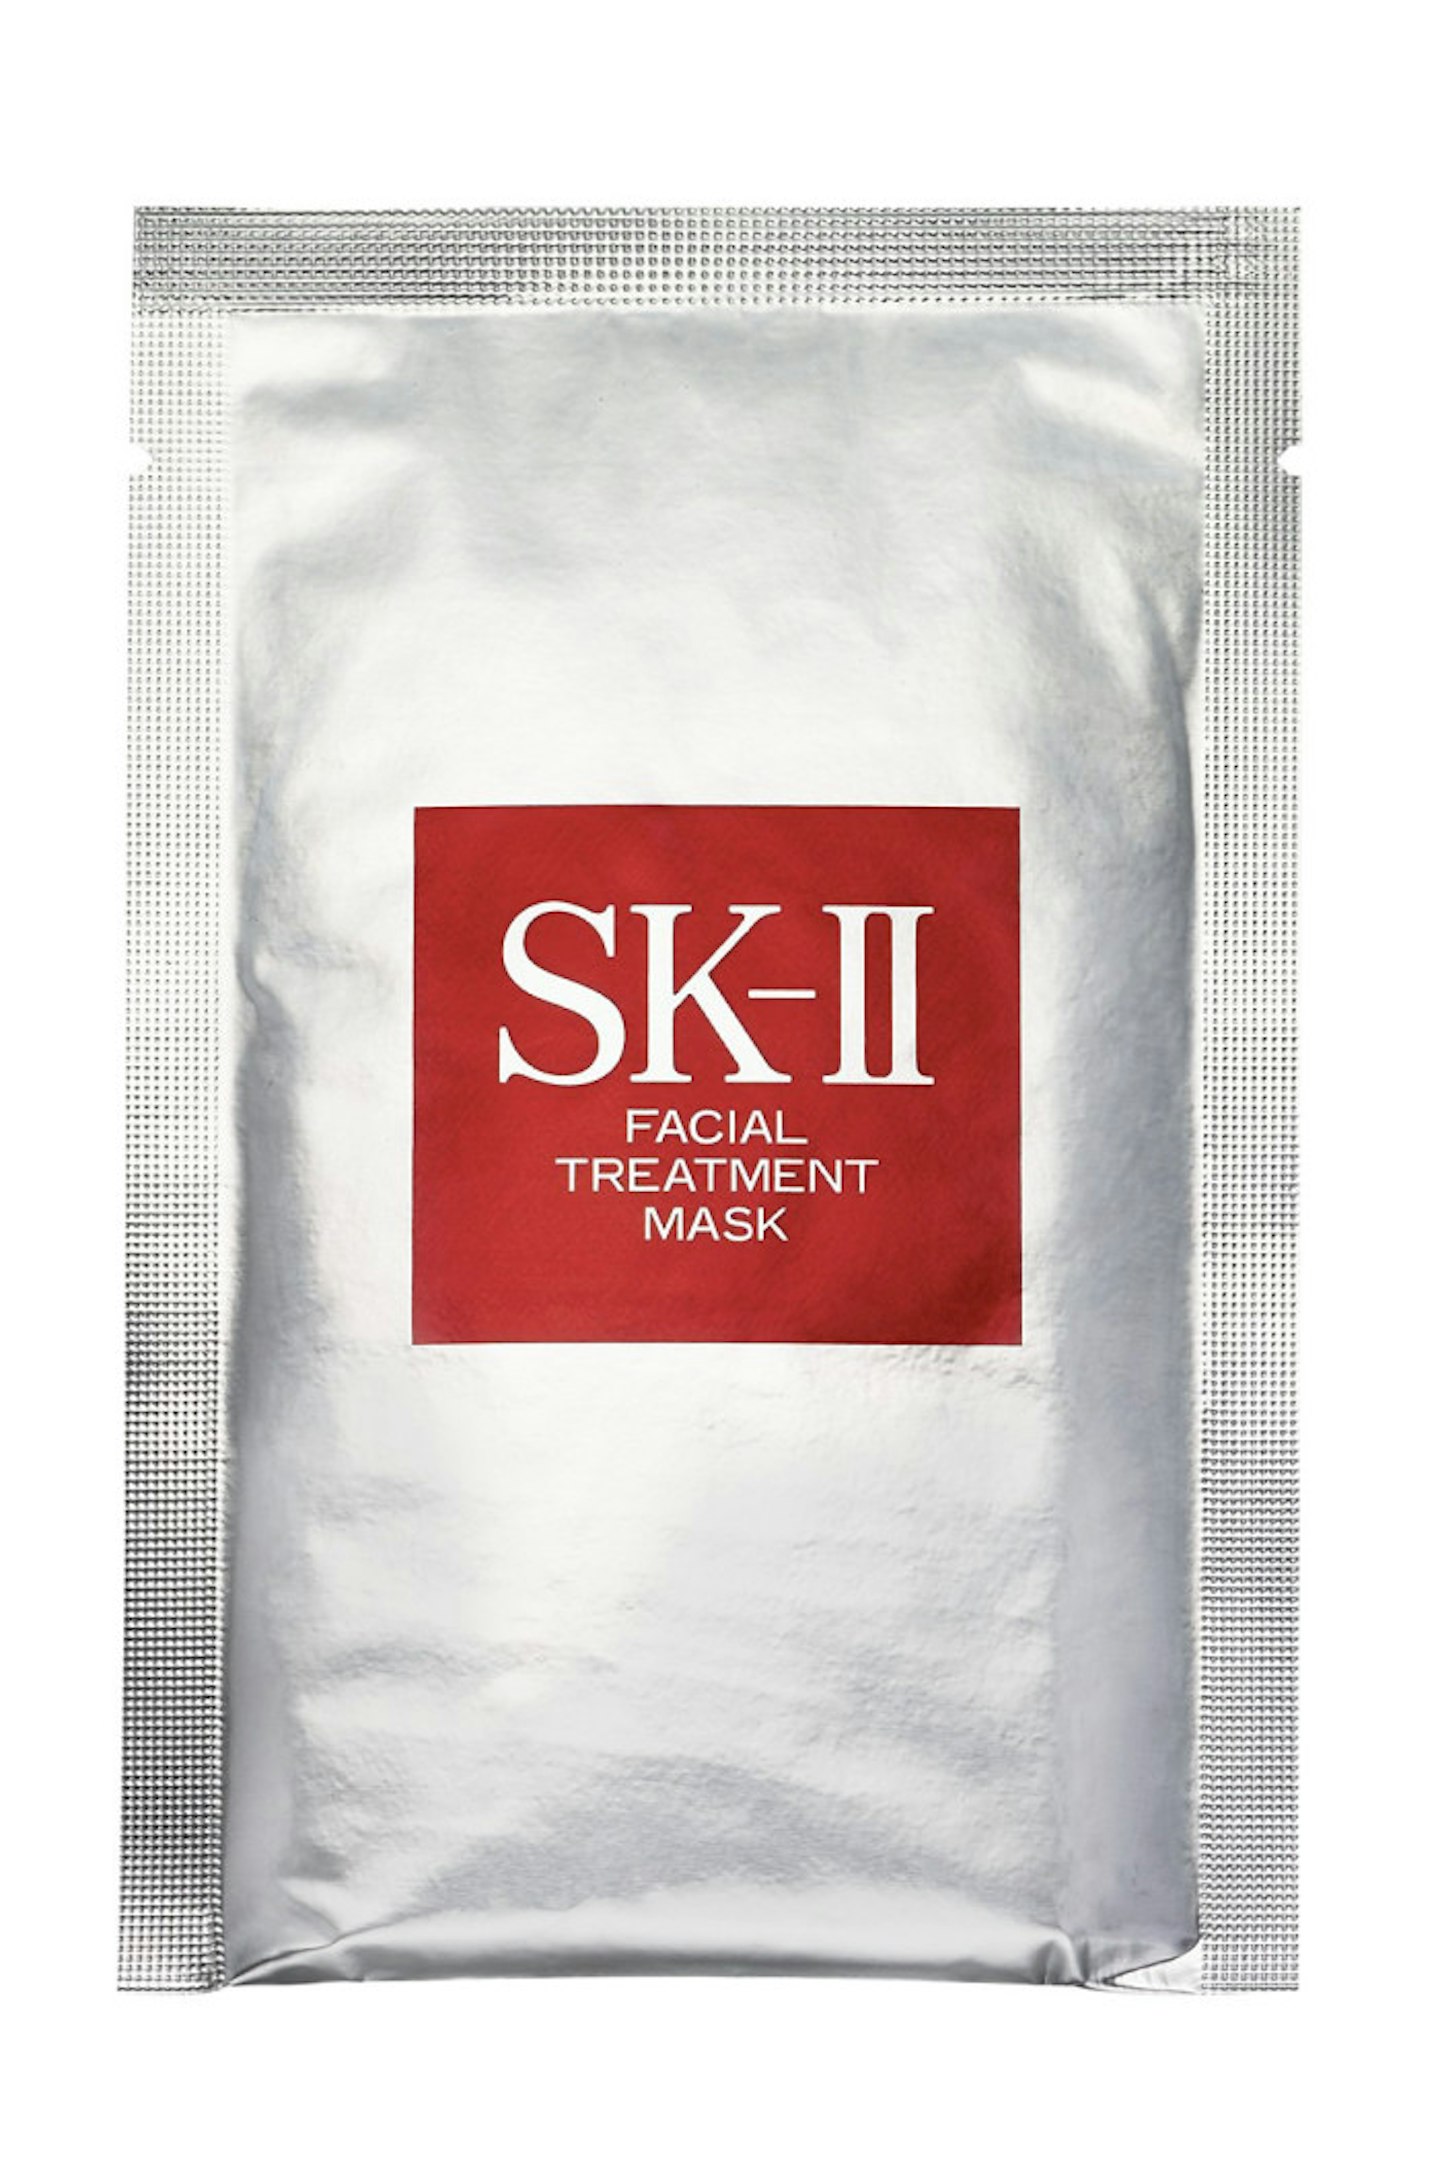 SK-II Facial Treatment Mask, £83 for 10